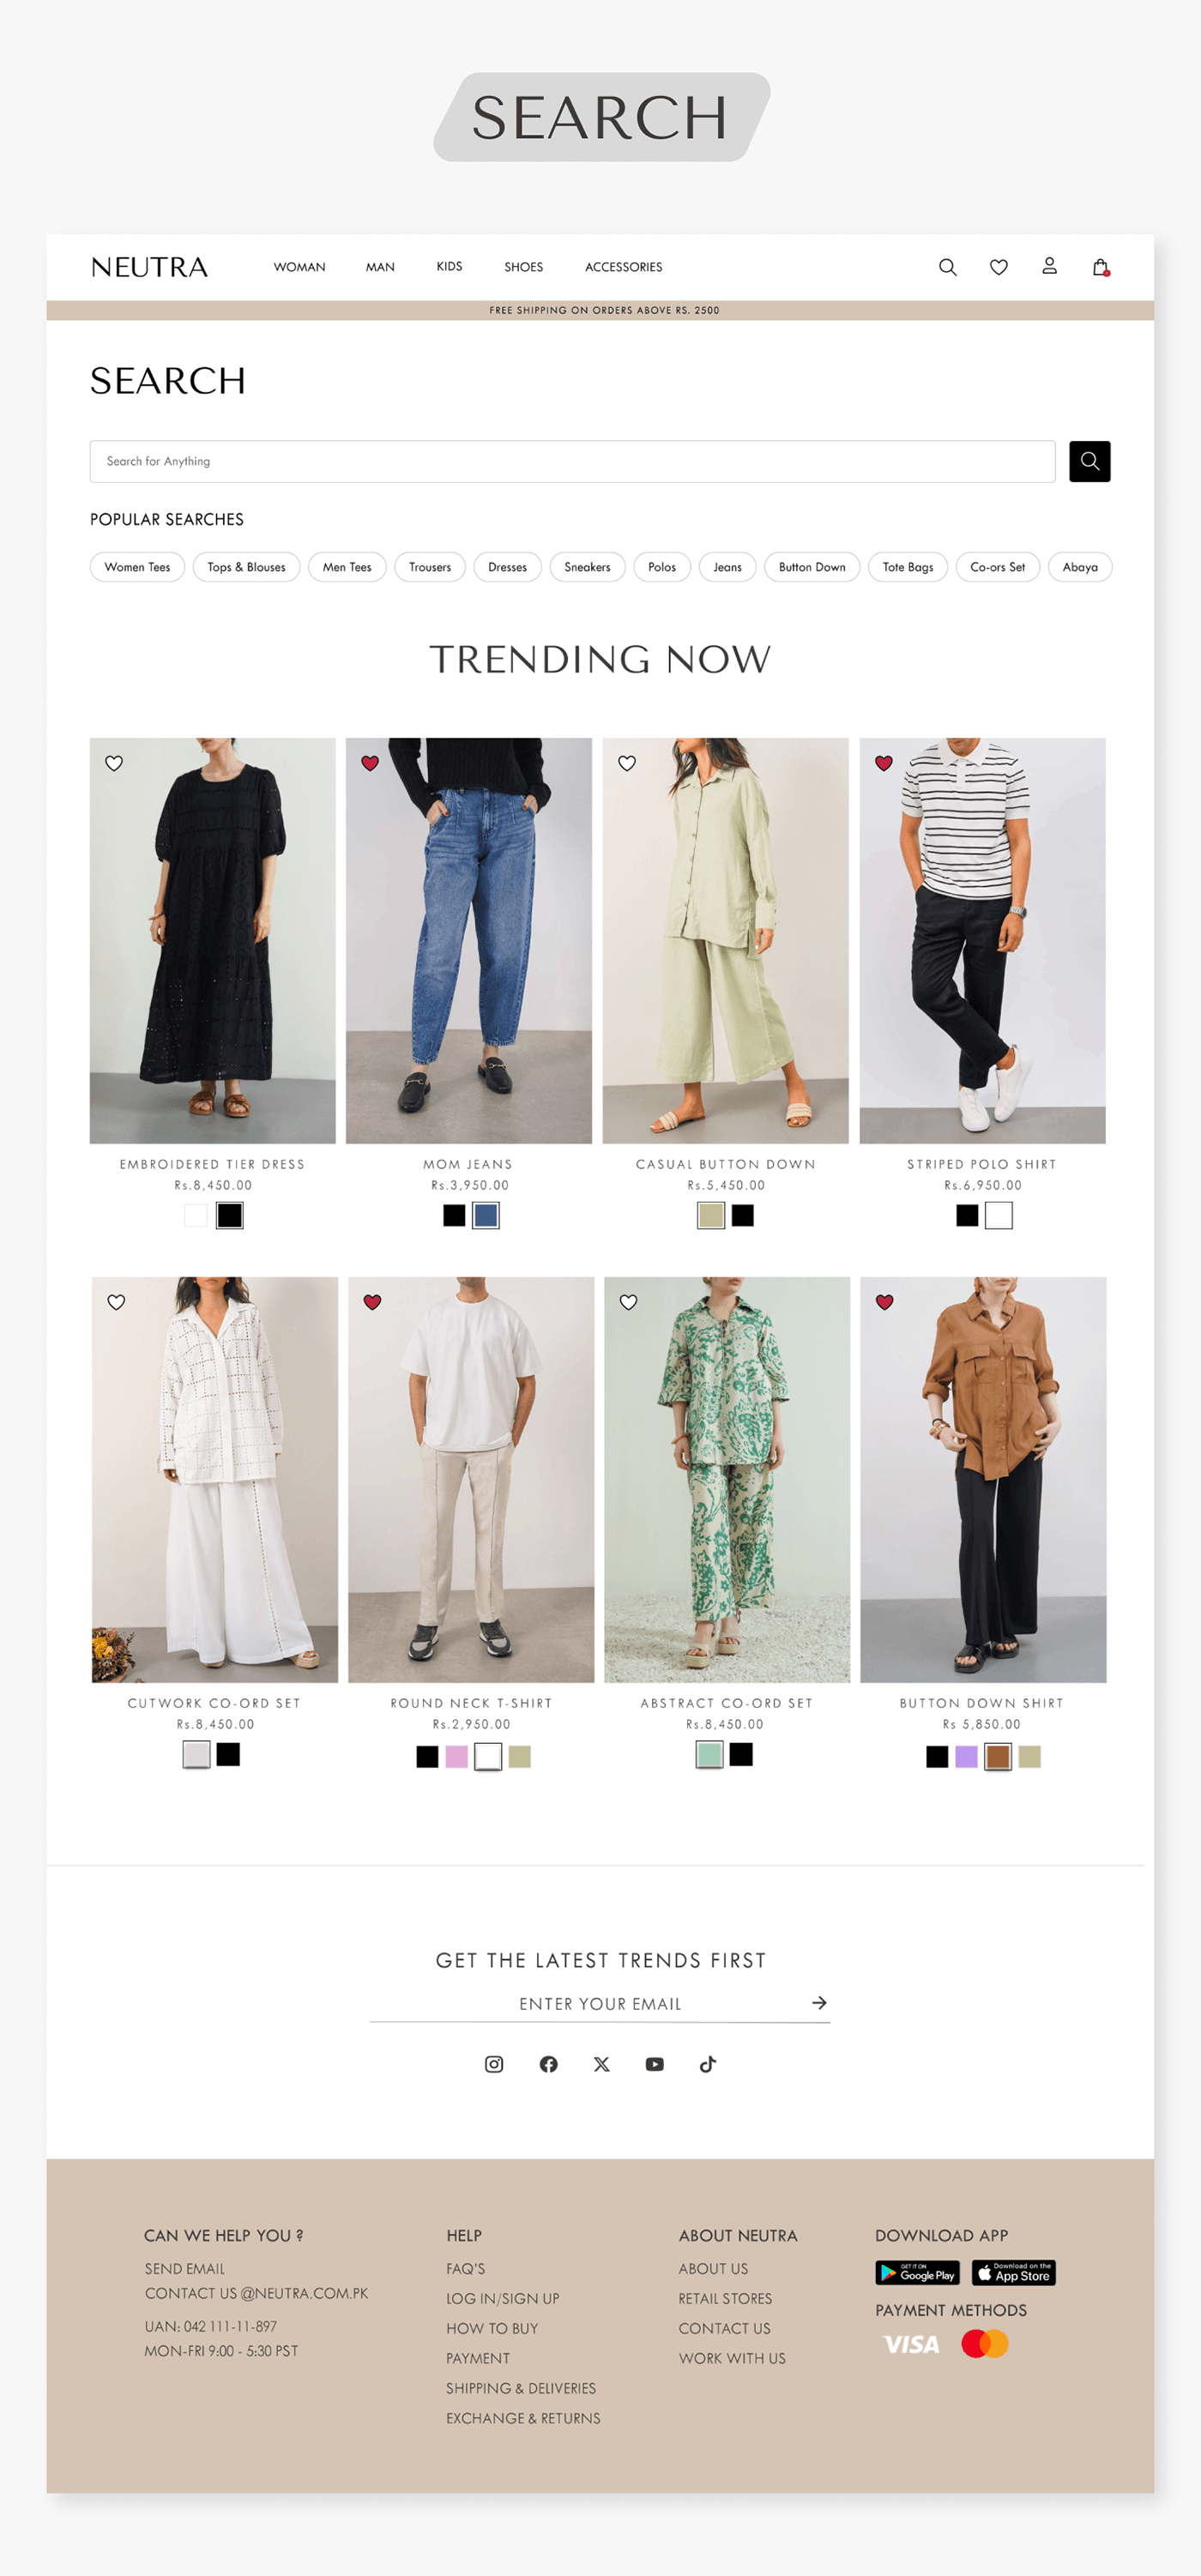 search screen of E commerce Fashion website's in figma